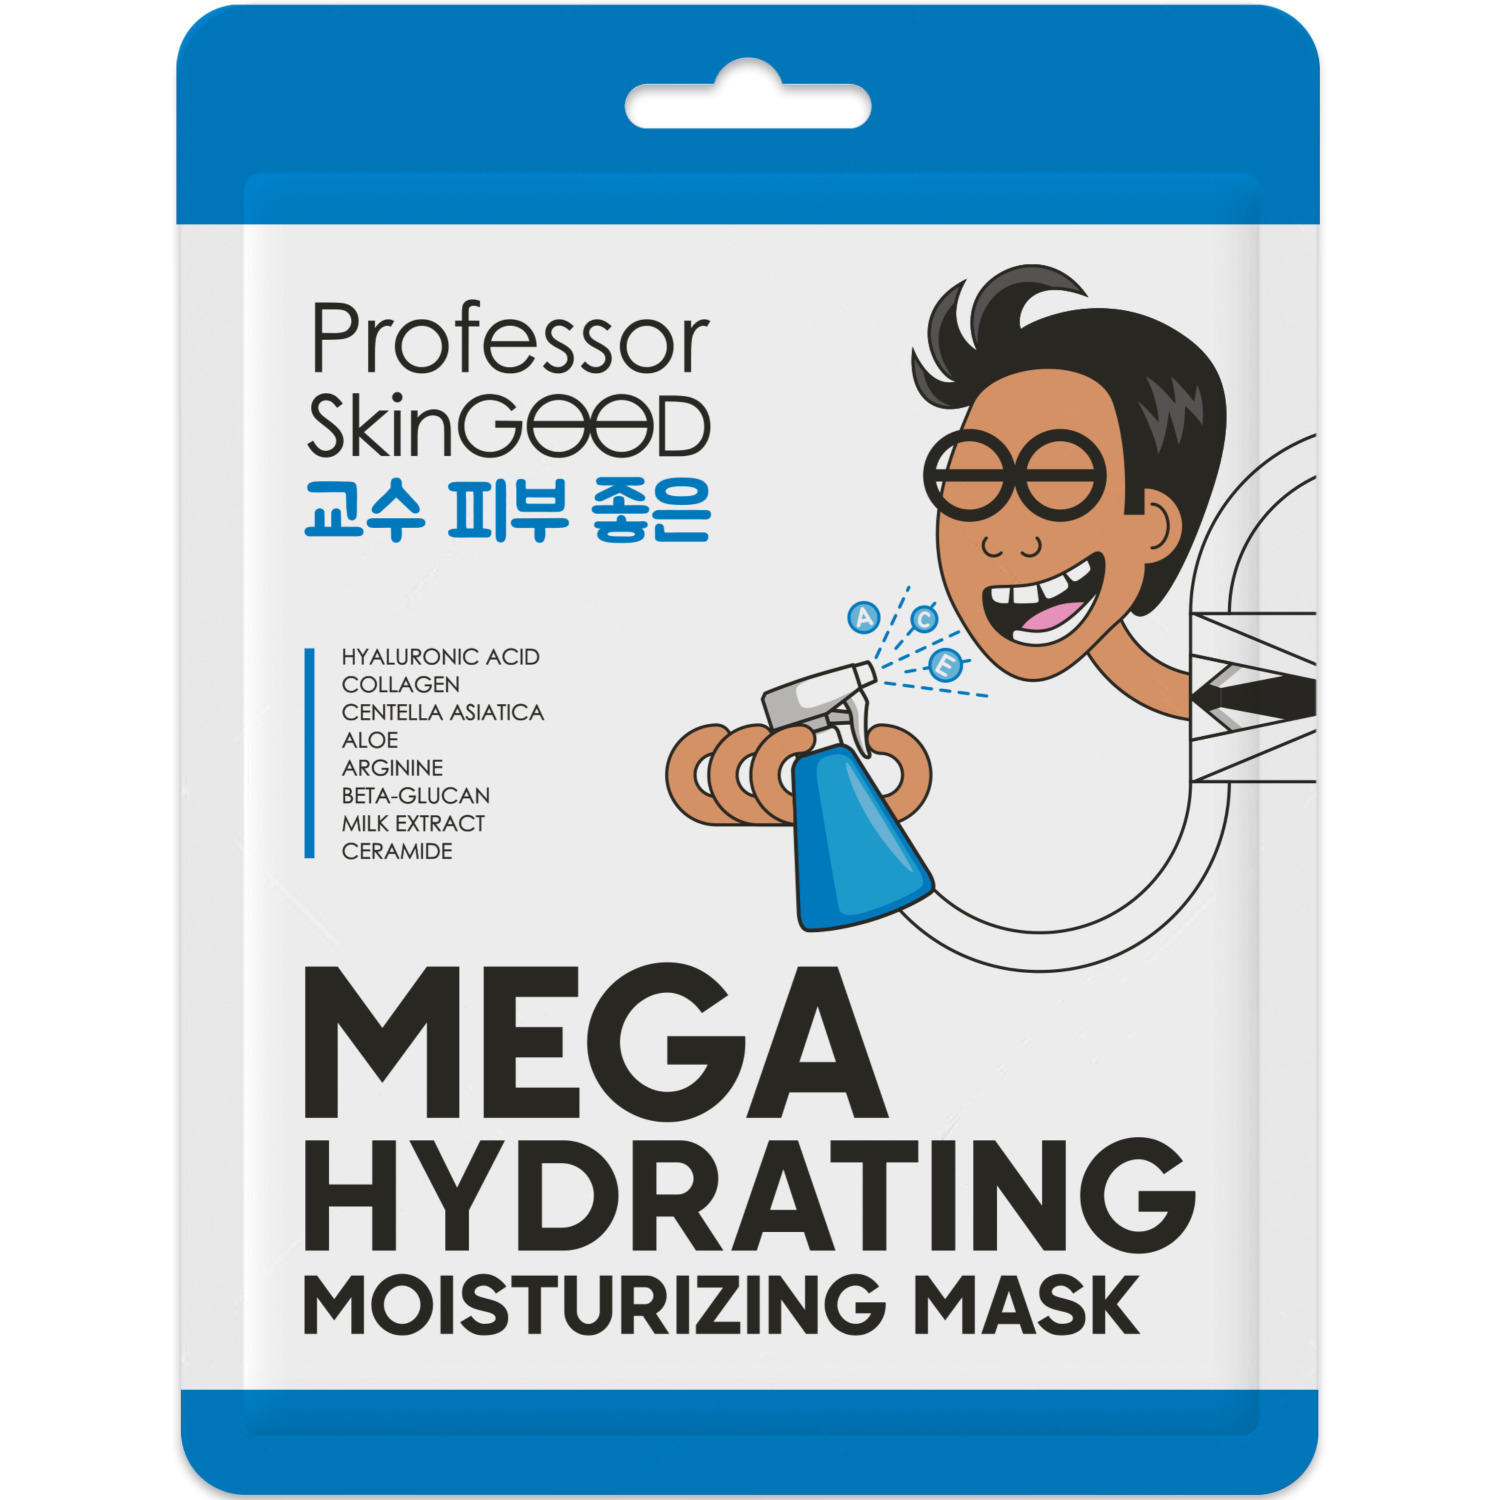 Professor SkinGOOD Увлажняющая маска Mega Hydrating Moisturizing Mask, 25 г (Professor SkinGOOD, Маски) маска для лица professor skingood глубокое и бережное очищение